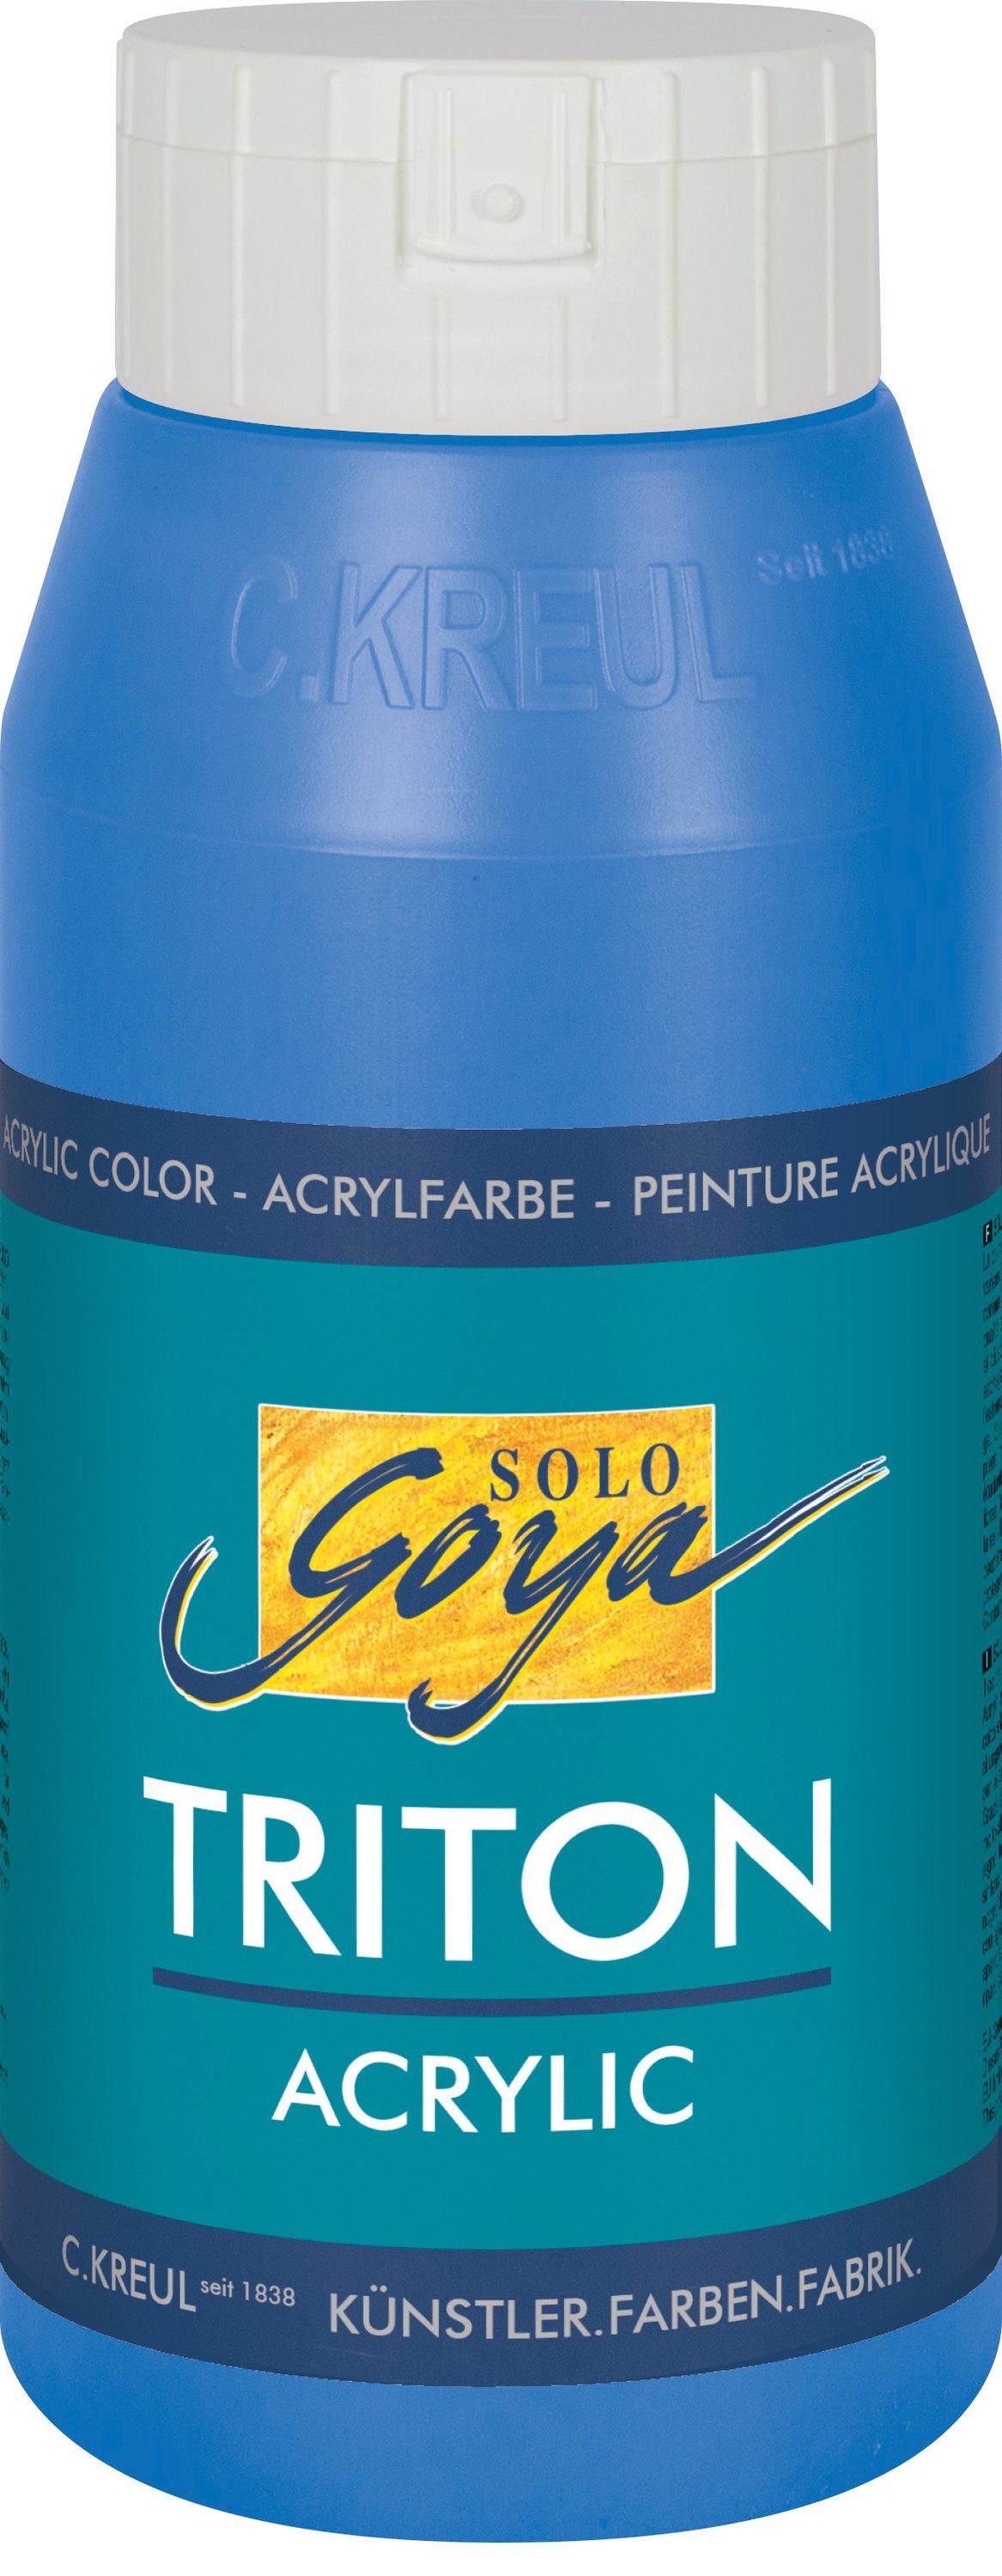 Kreul Acrylfarbe Solo Goya Triton Acrylic, 750 ml Primärblau